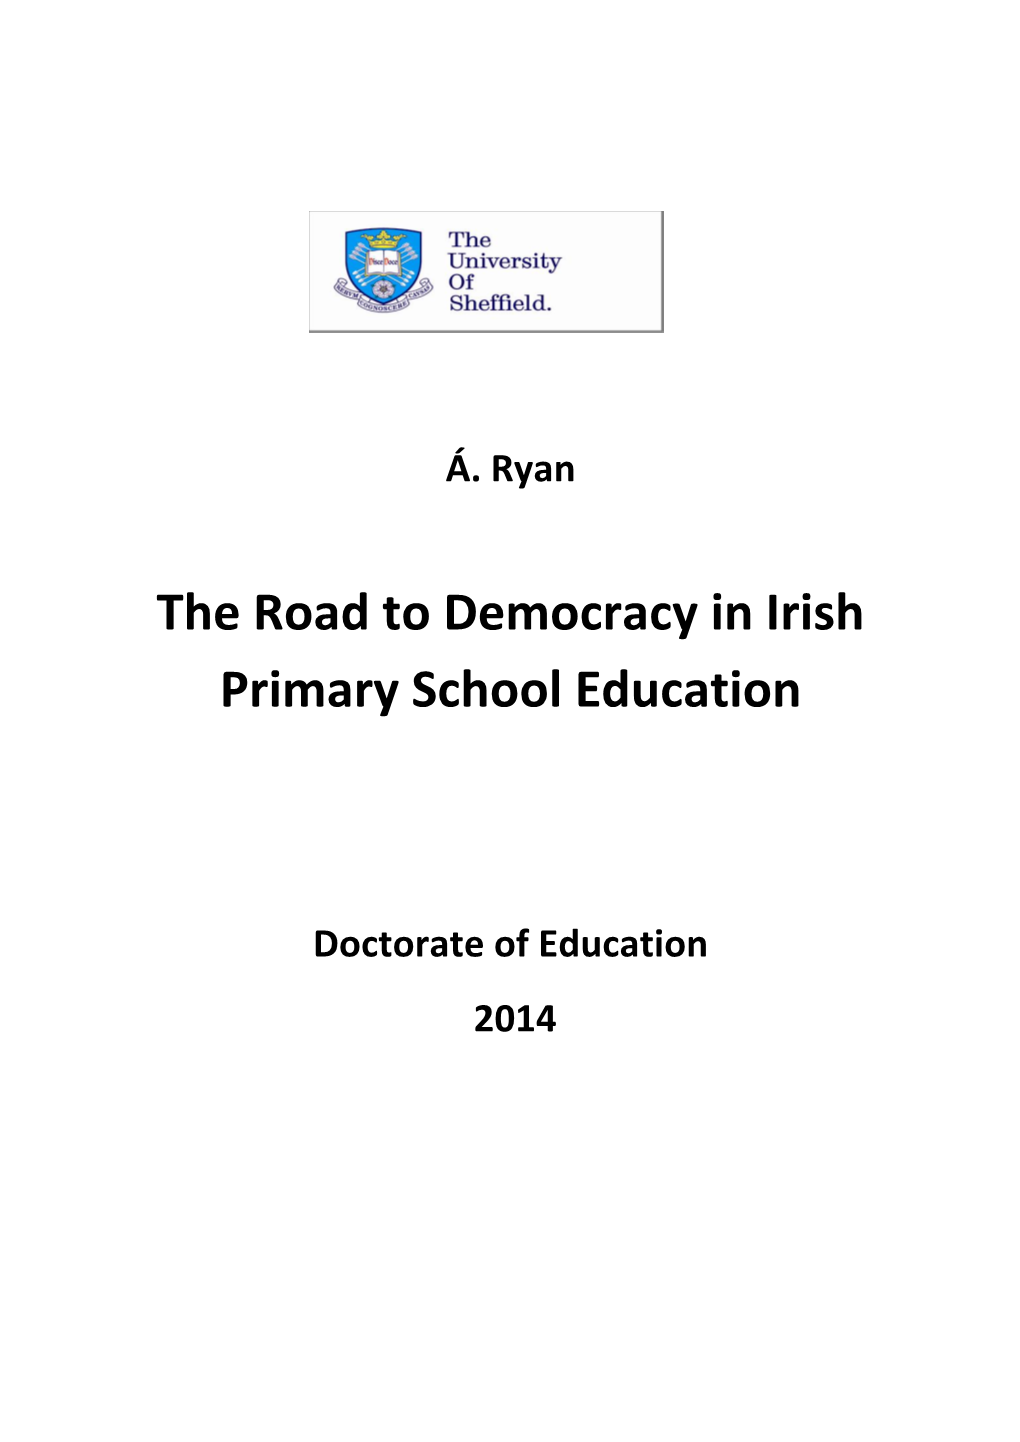 The Road to Democracy in Irish Primary School Education